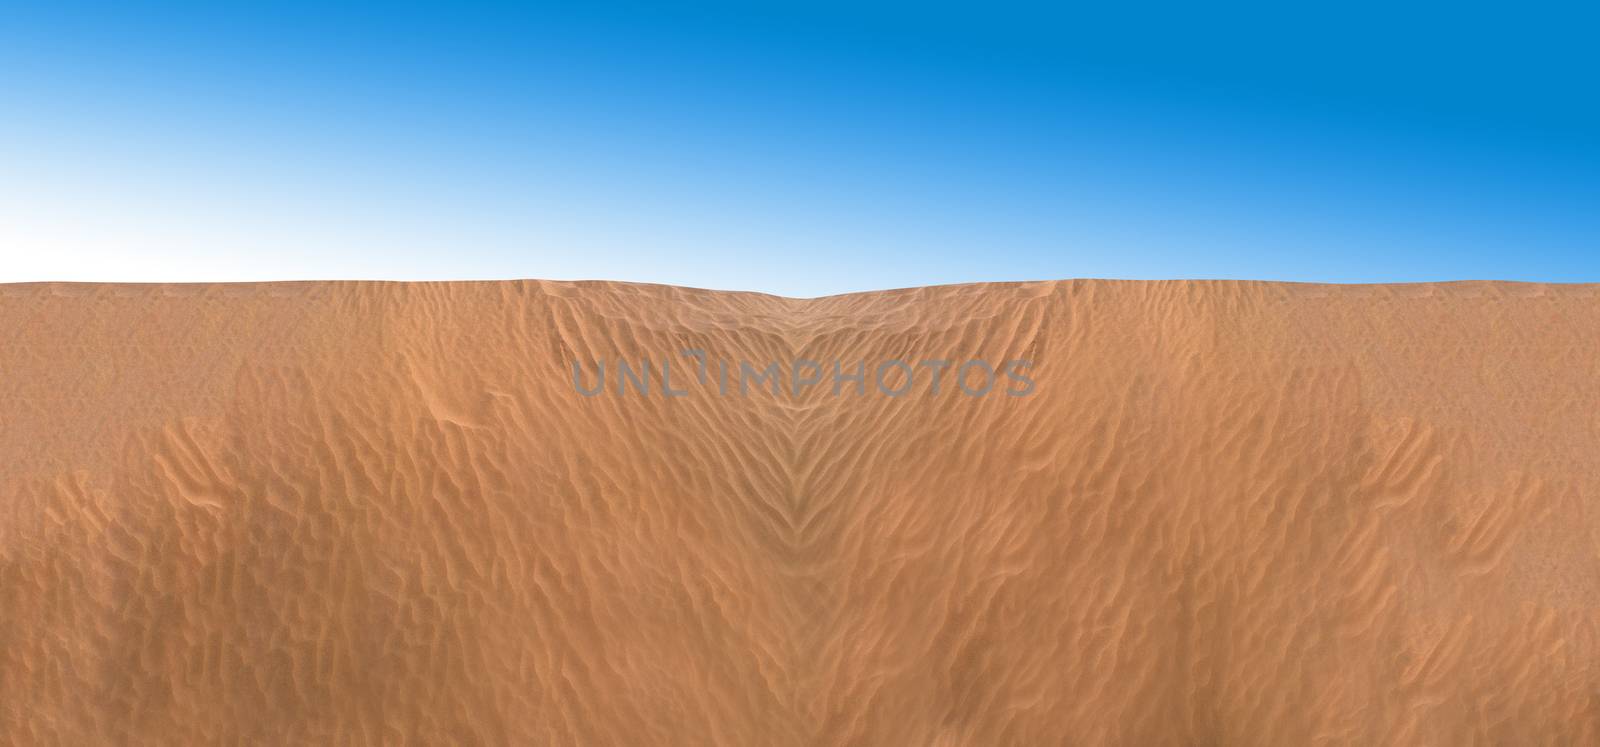 Sand desert by ozaiachin